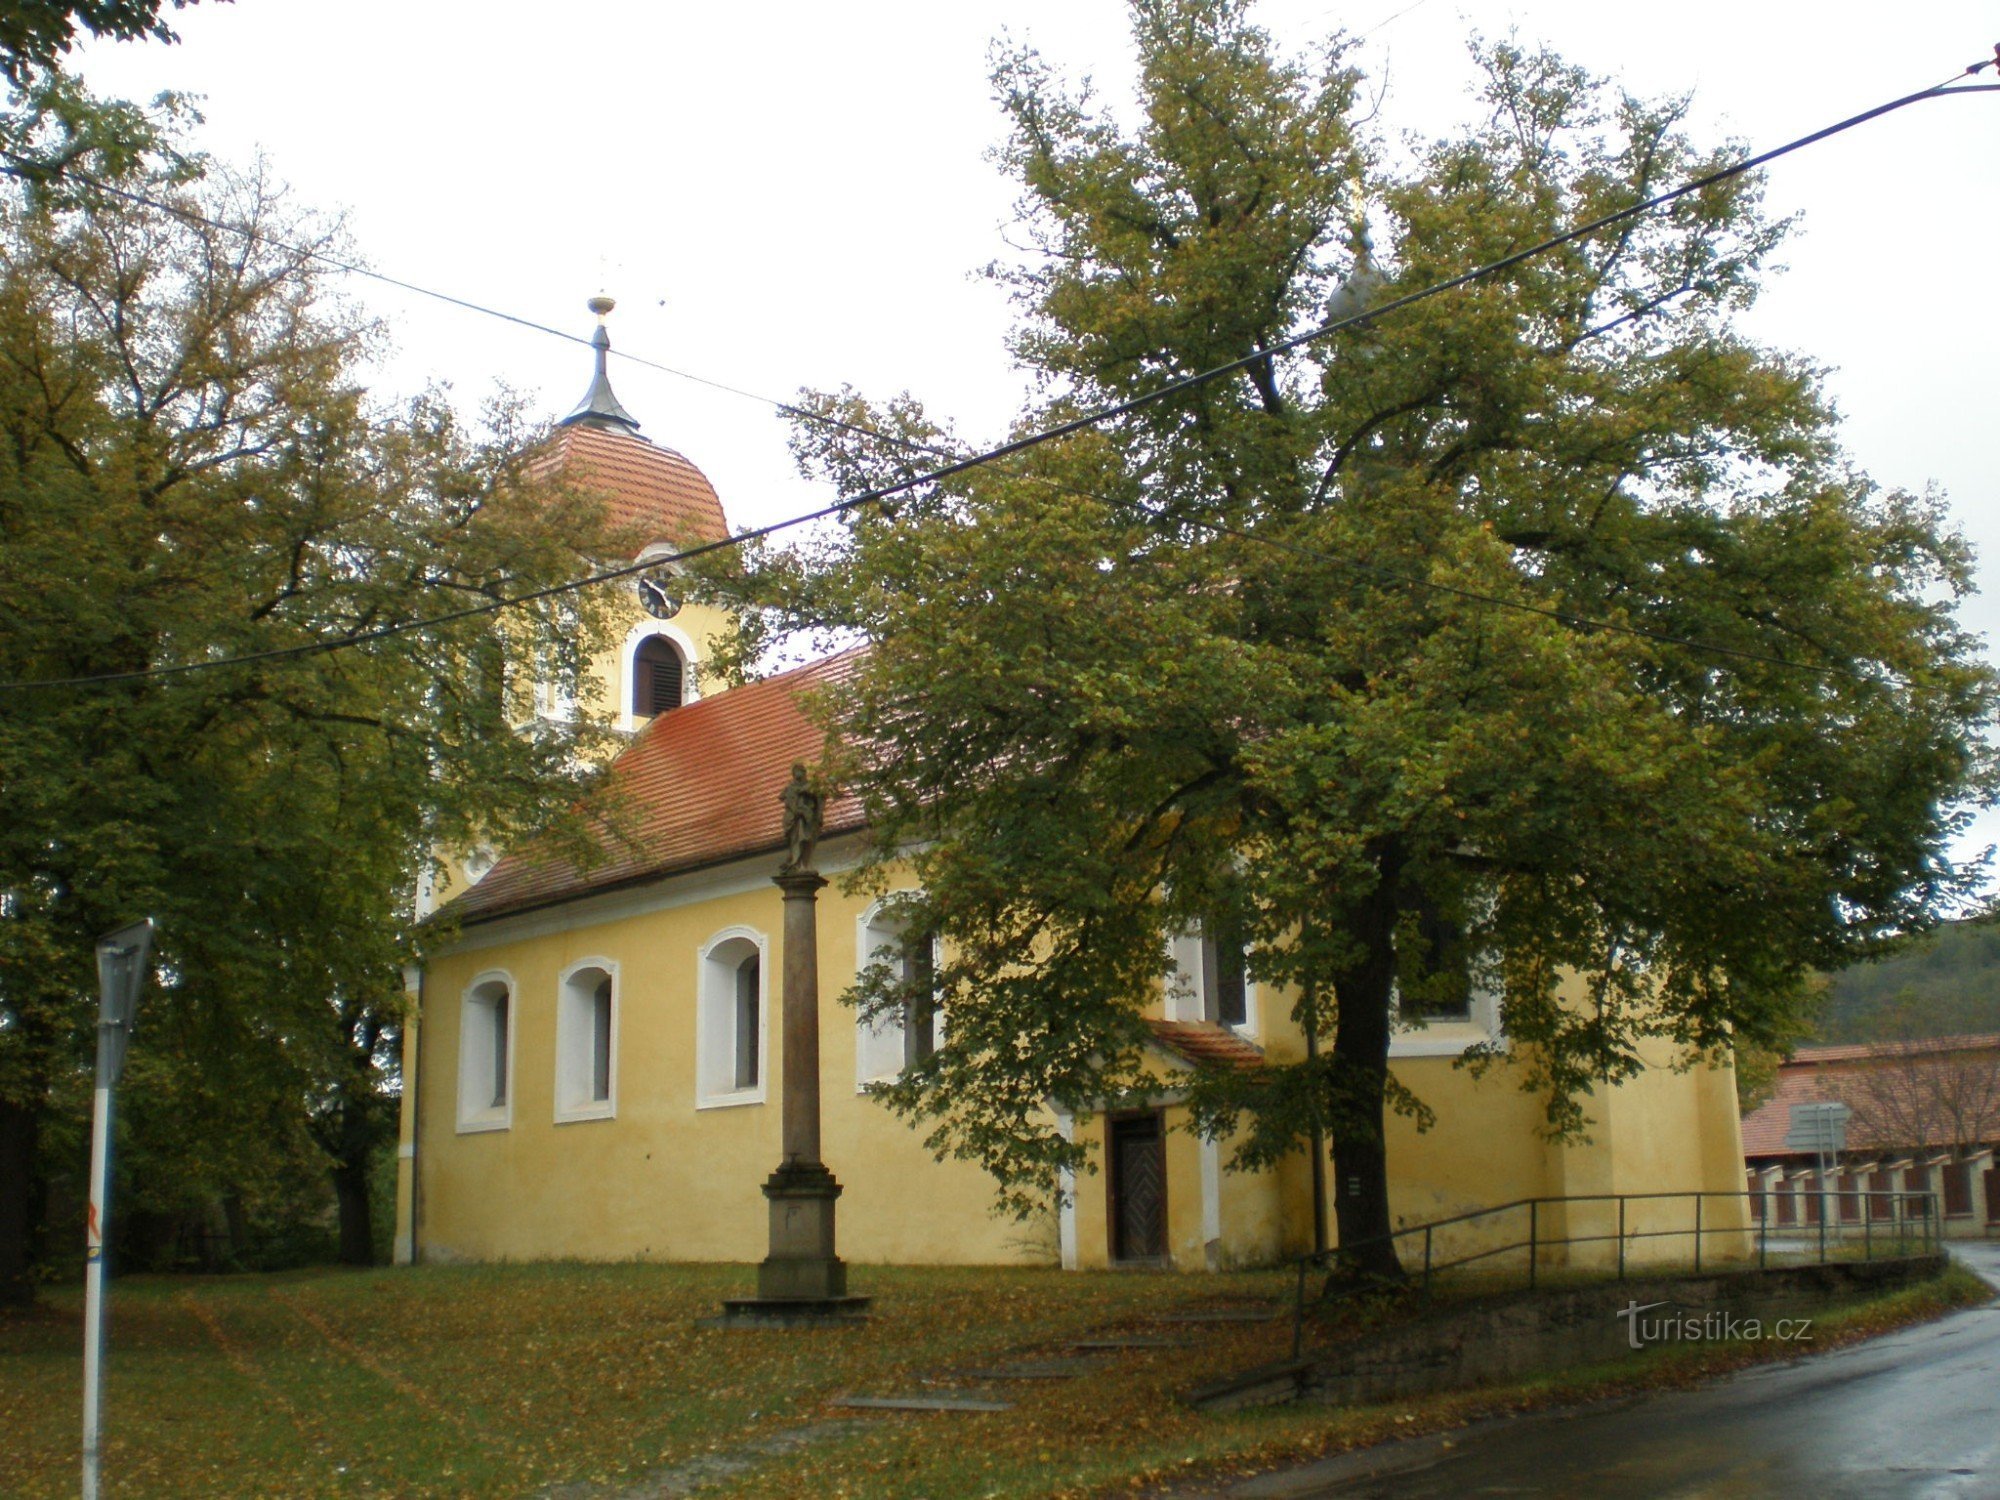 Lochovice - kirken St. Andrew